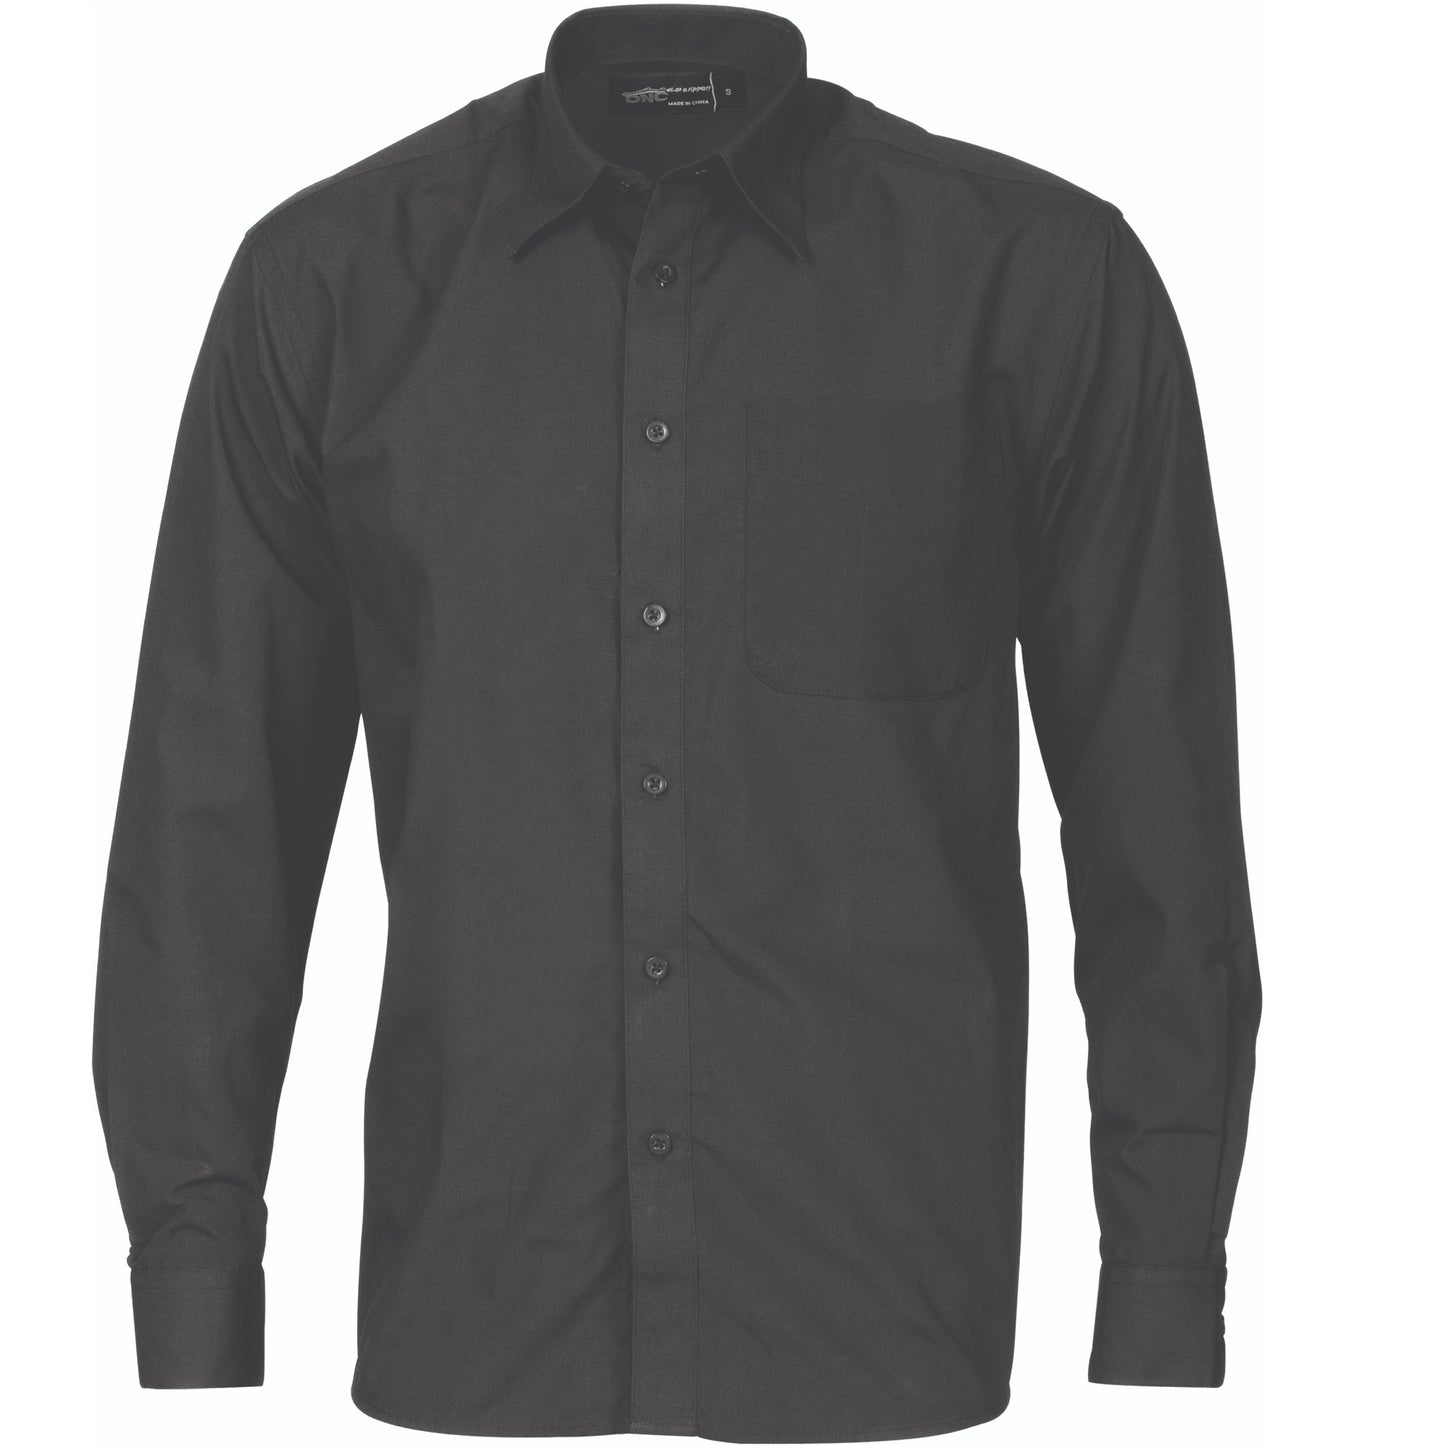 DNC Polyester Cotton Business Shirt - Long Sleeve 4132 - Star Uniforms Australia